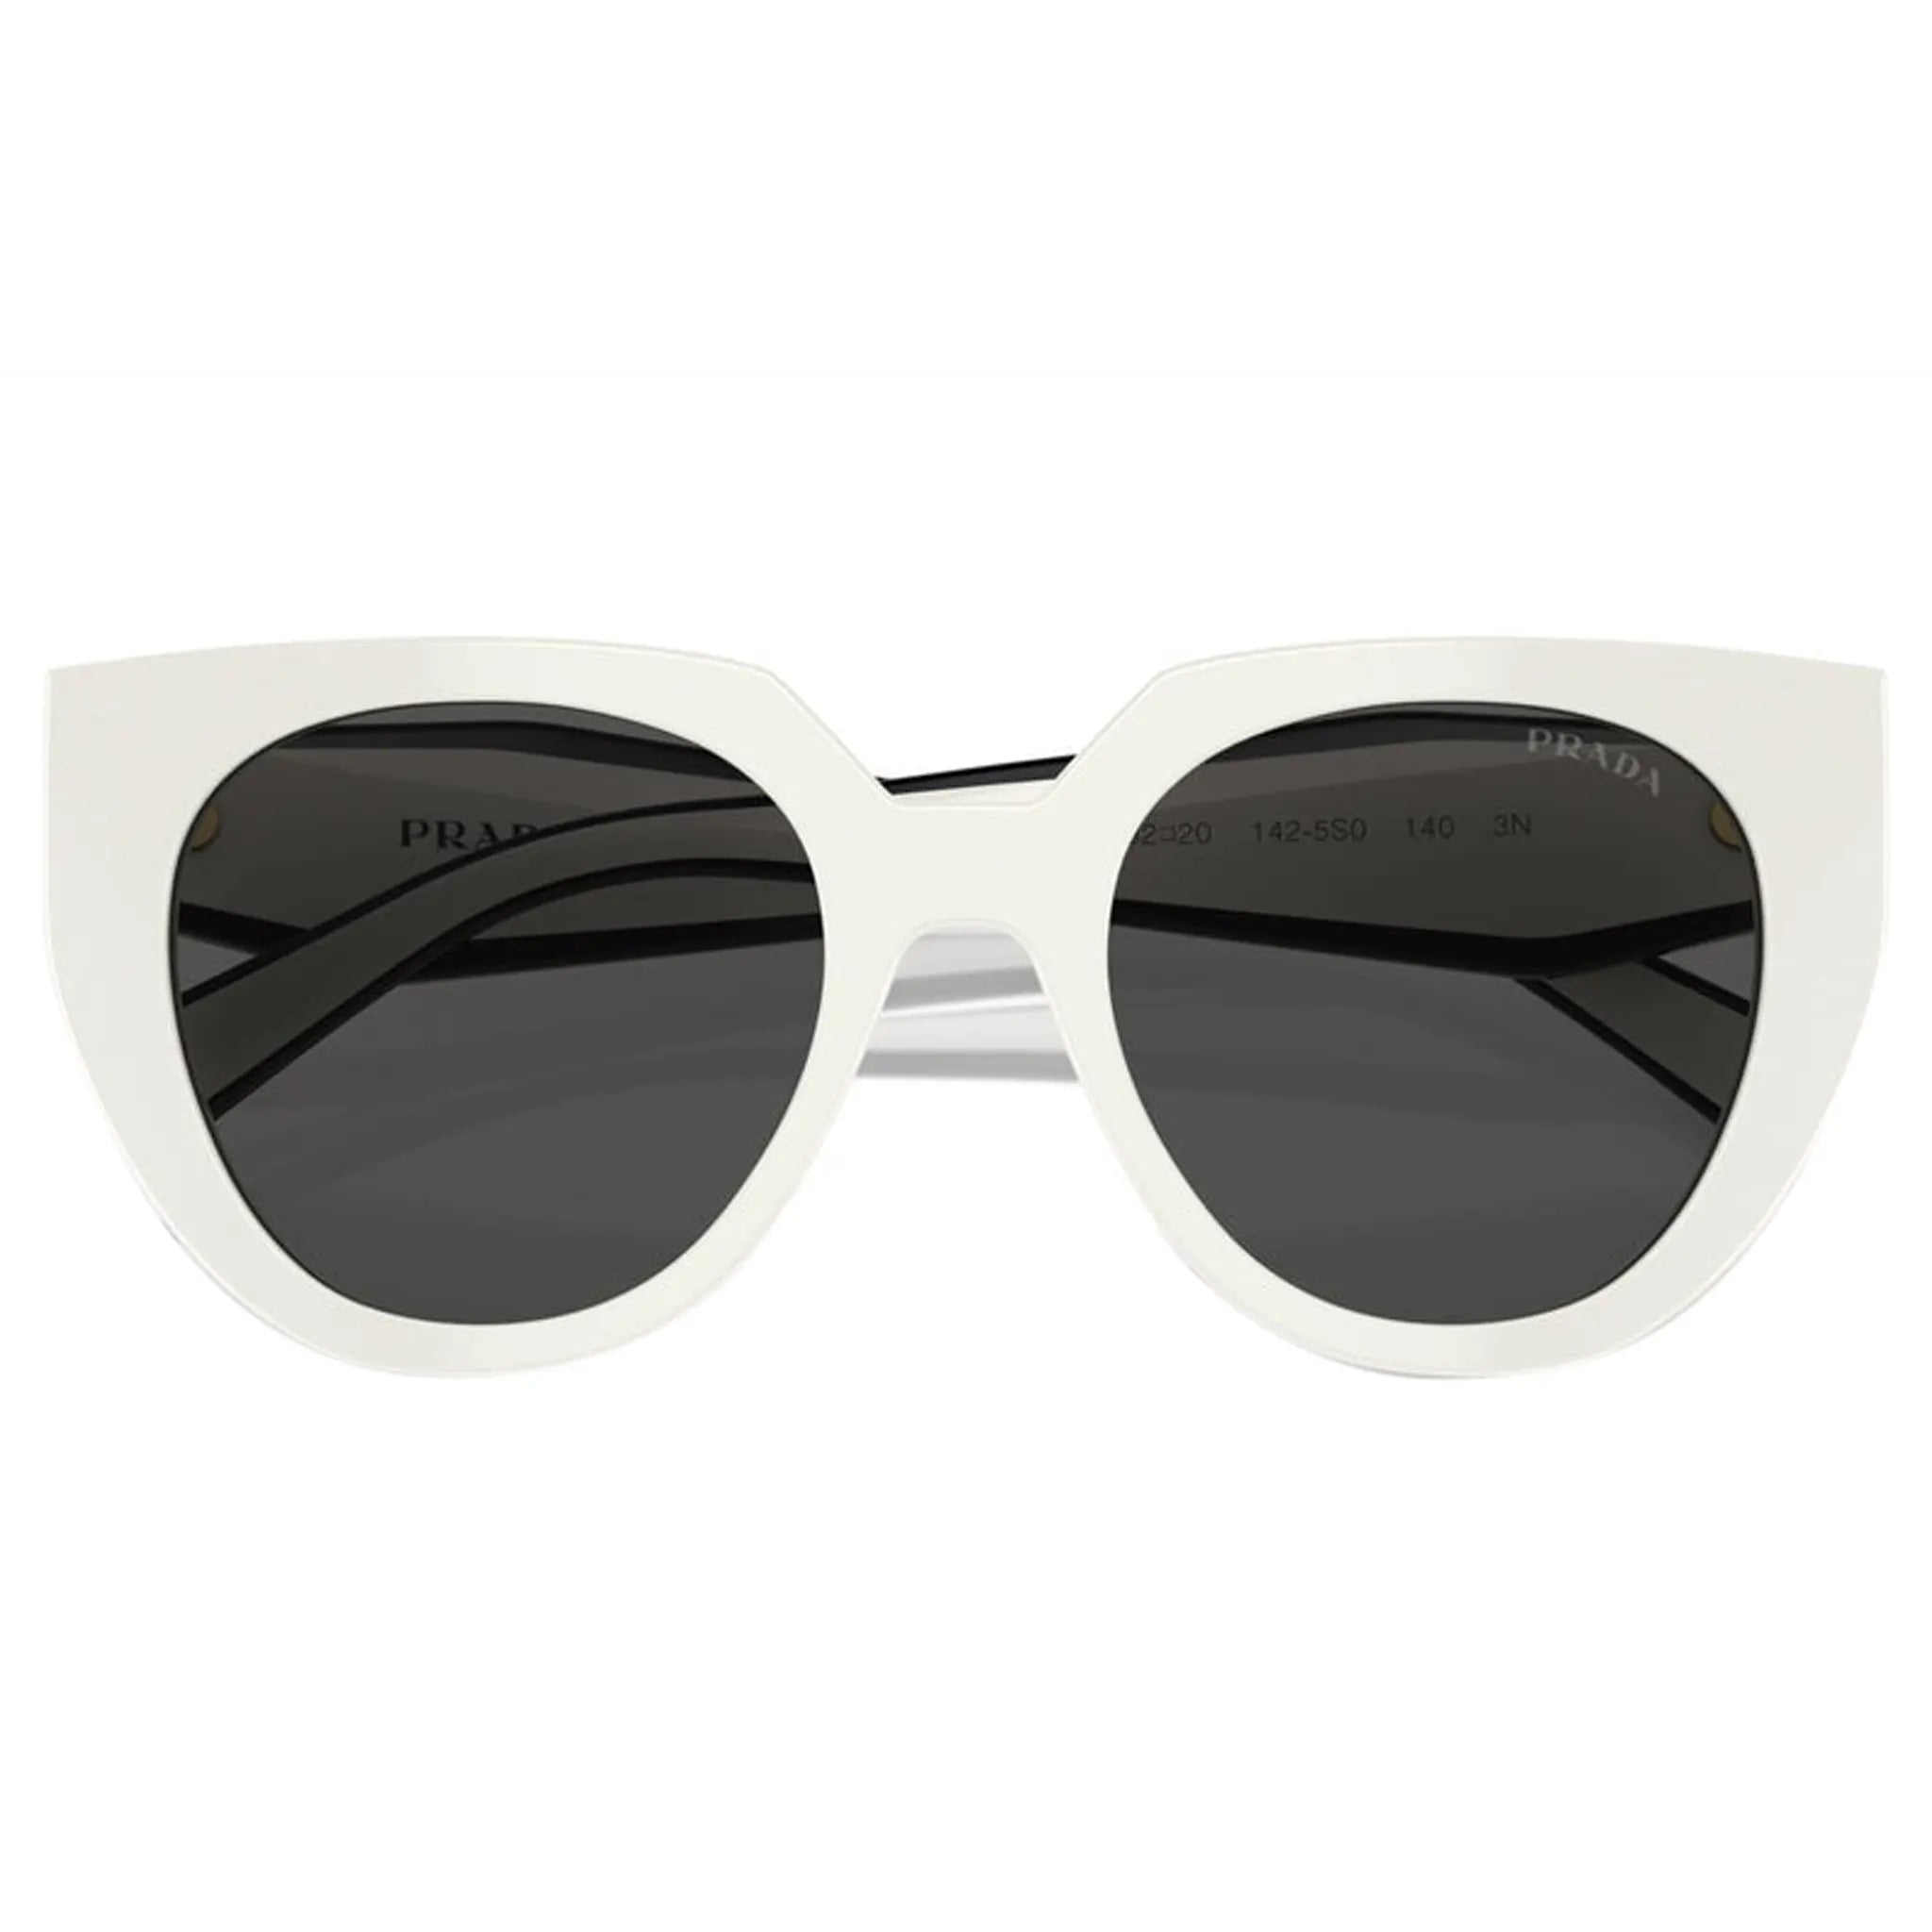 Folded view of Prada PR 14WS 1425S0 Talc Sunglasses